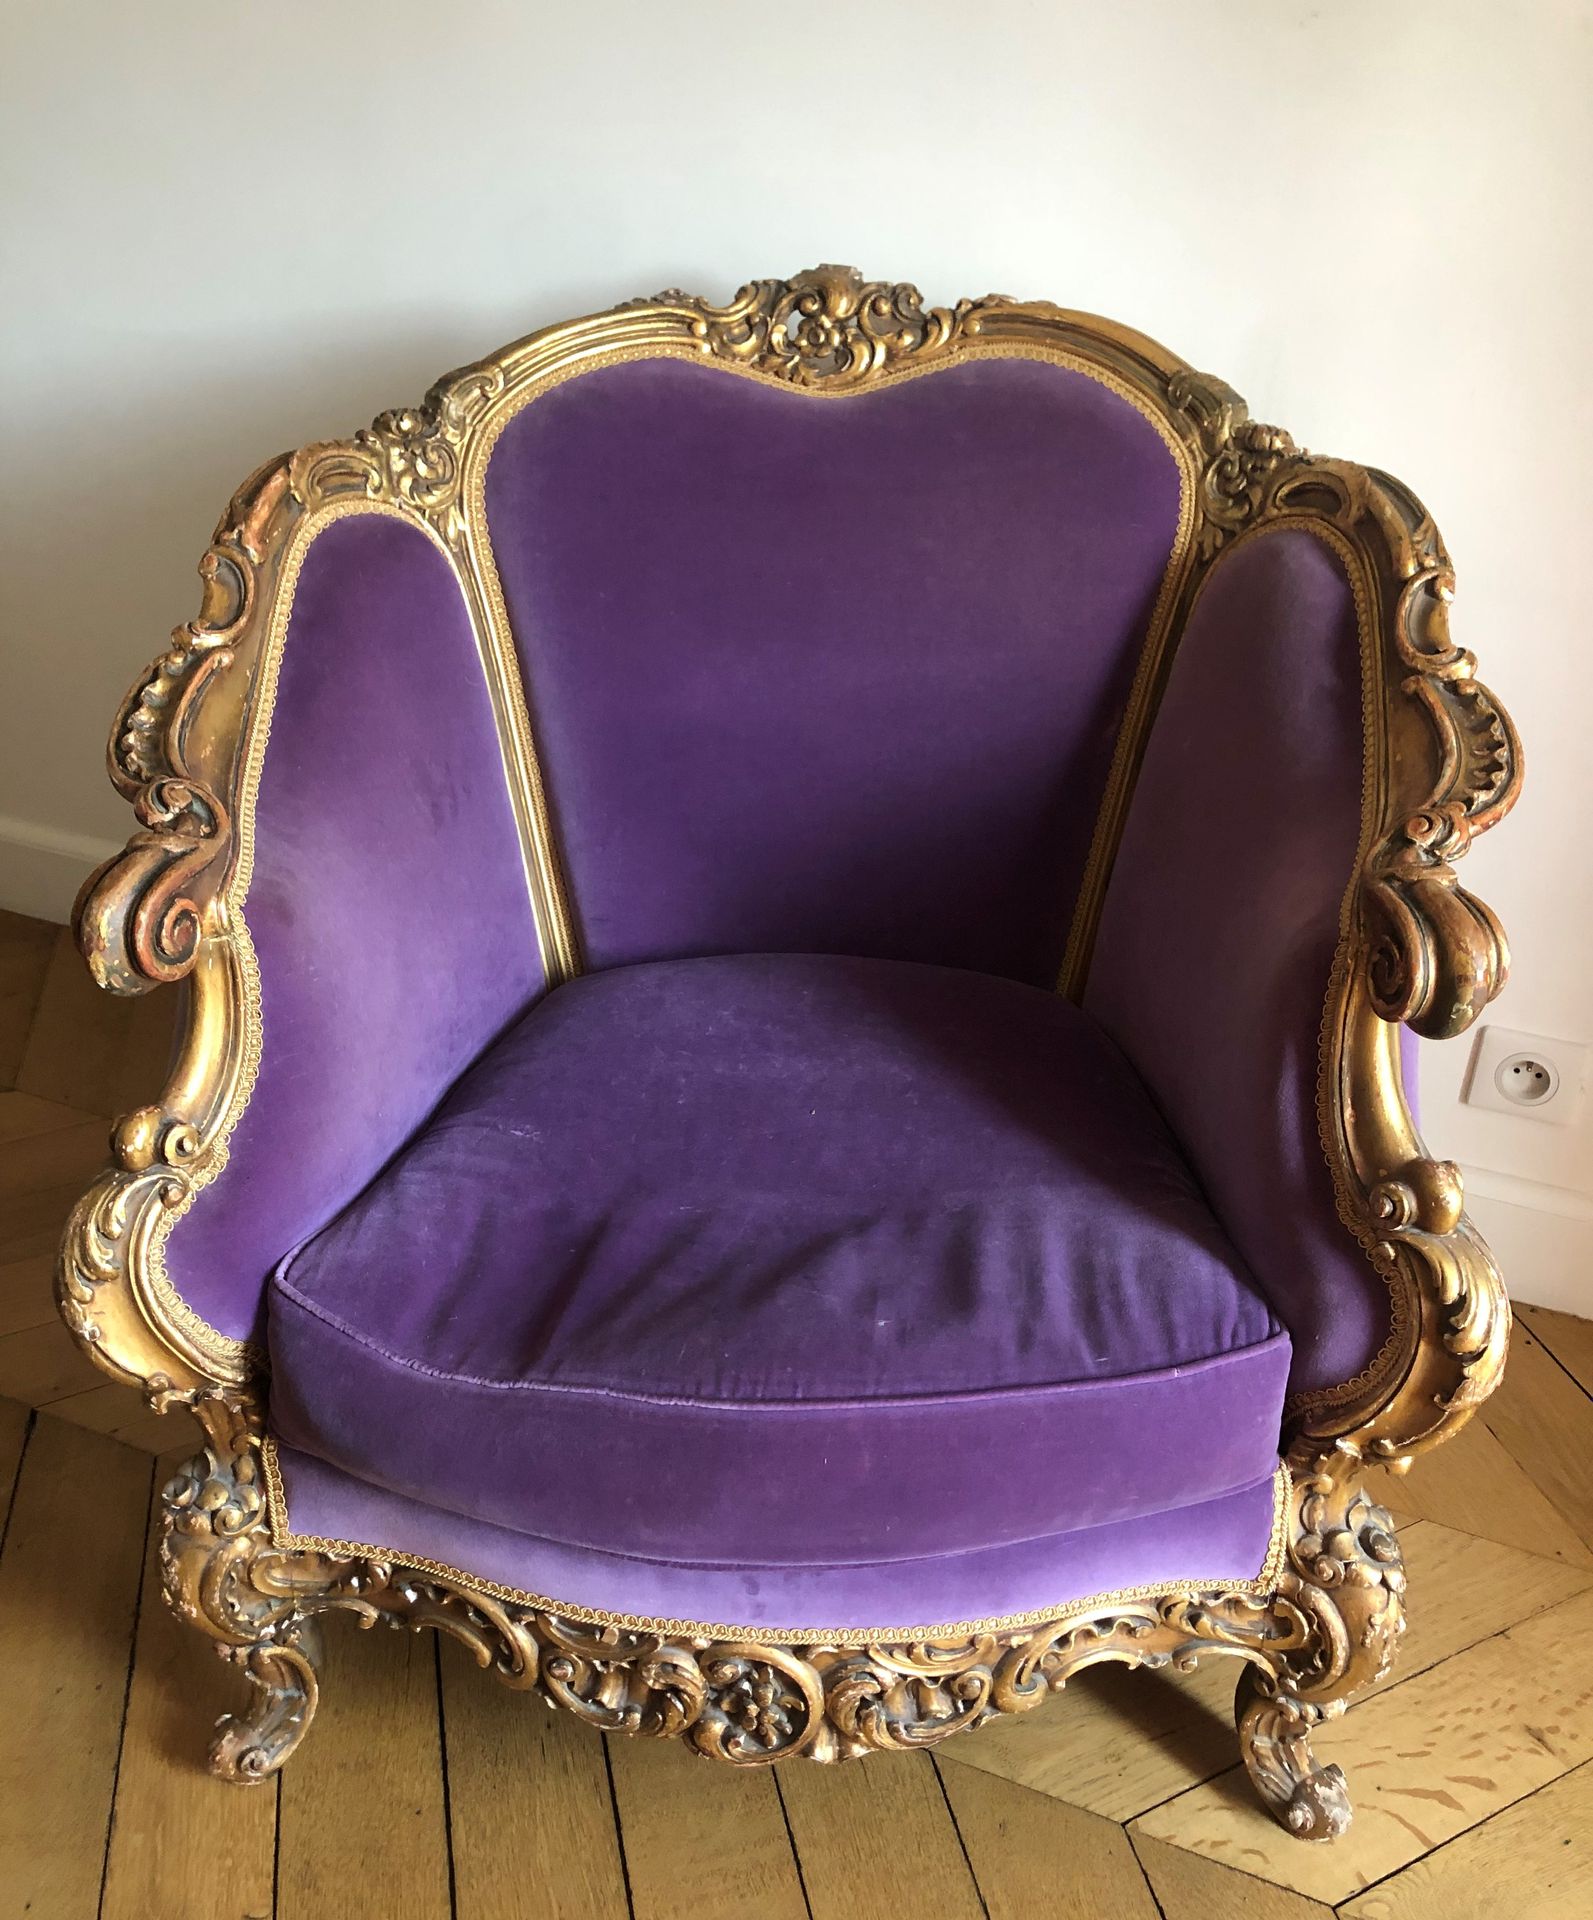 Null 一对移动形状的大型雕刻和镀金的木质牧羊人椅子，用红心的紫色天鹅绒装饰。威尼斯的巴洛克作品。高度：87厘米87厘米；宽度：87厘米；座椅深度：57厘米。